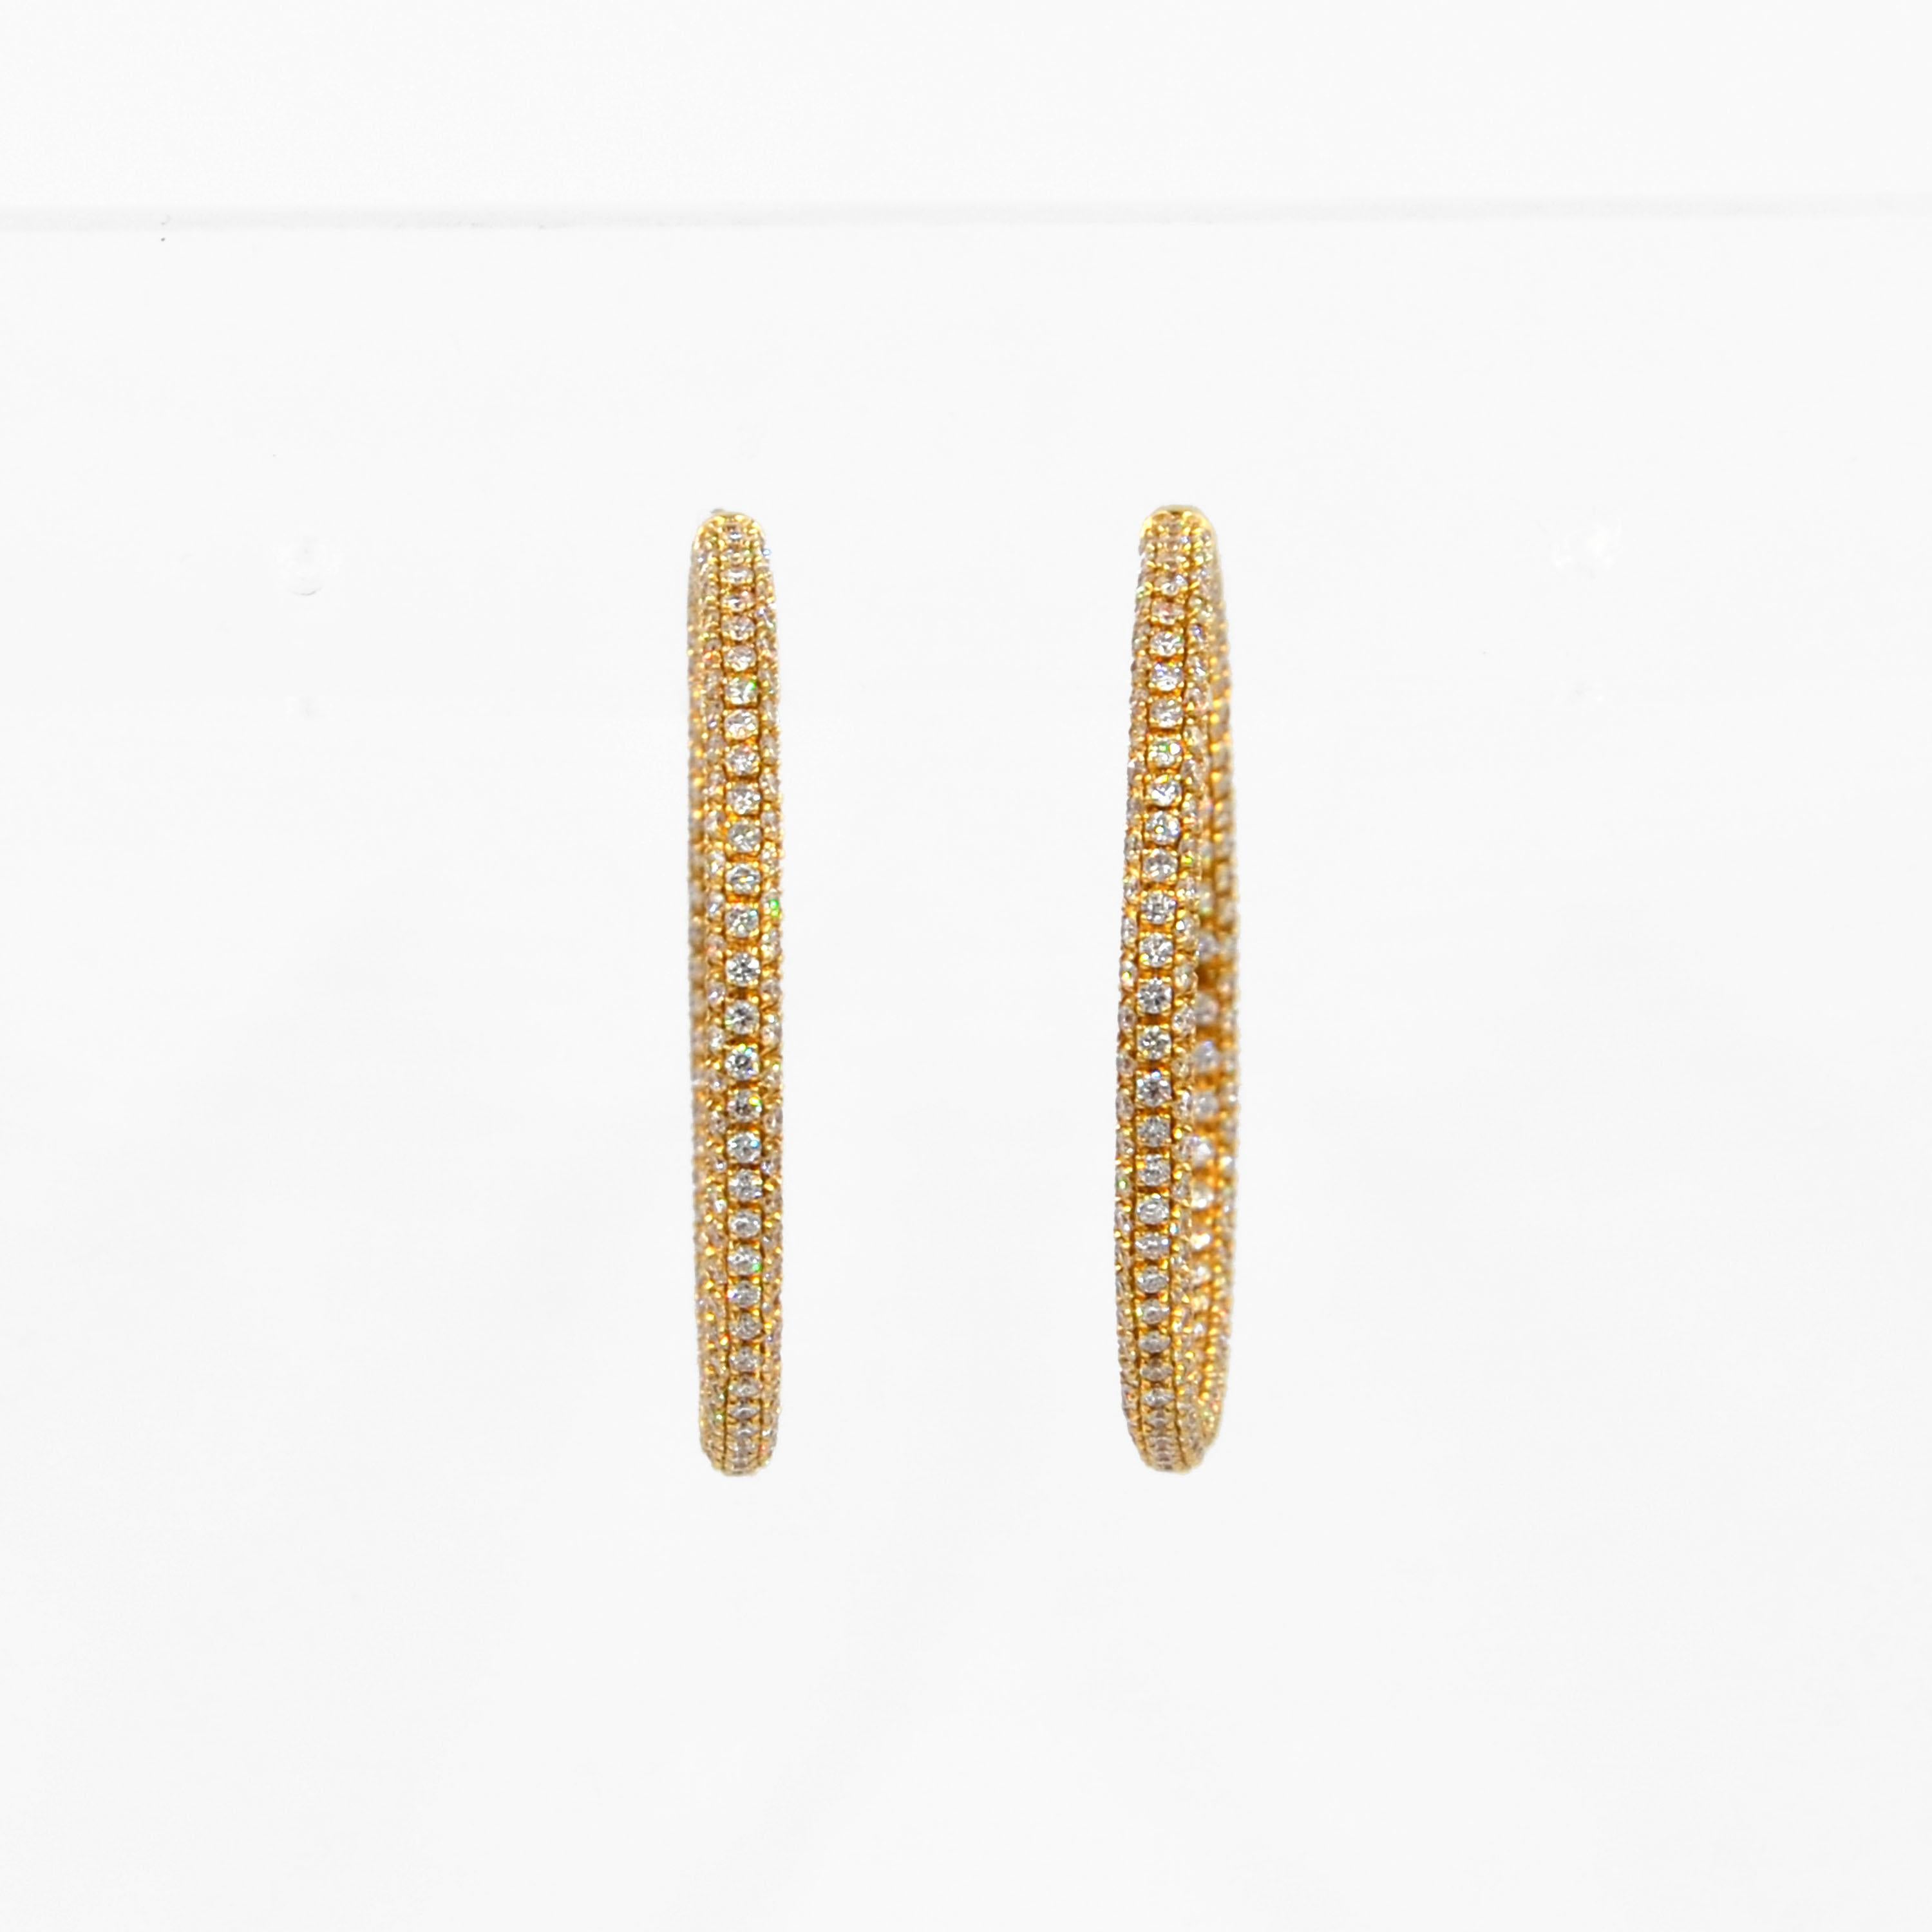 Contemporary Garavelli 18 Karat Yellow Gold Diamond Eternity Hoop Earrings For Sale